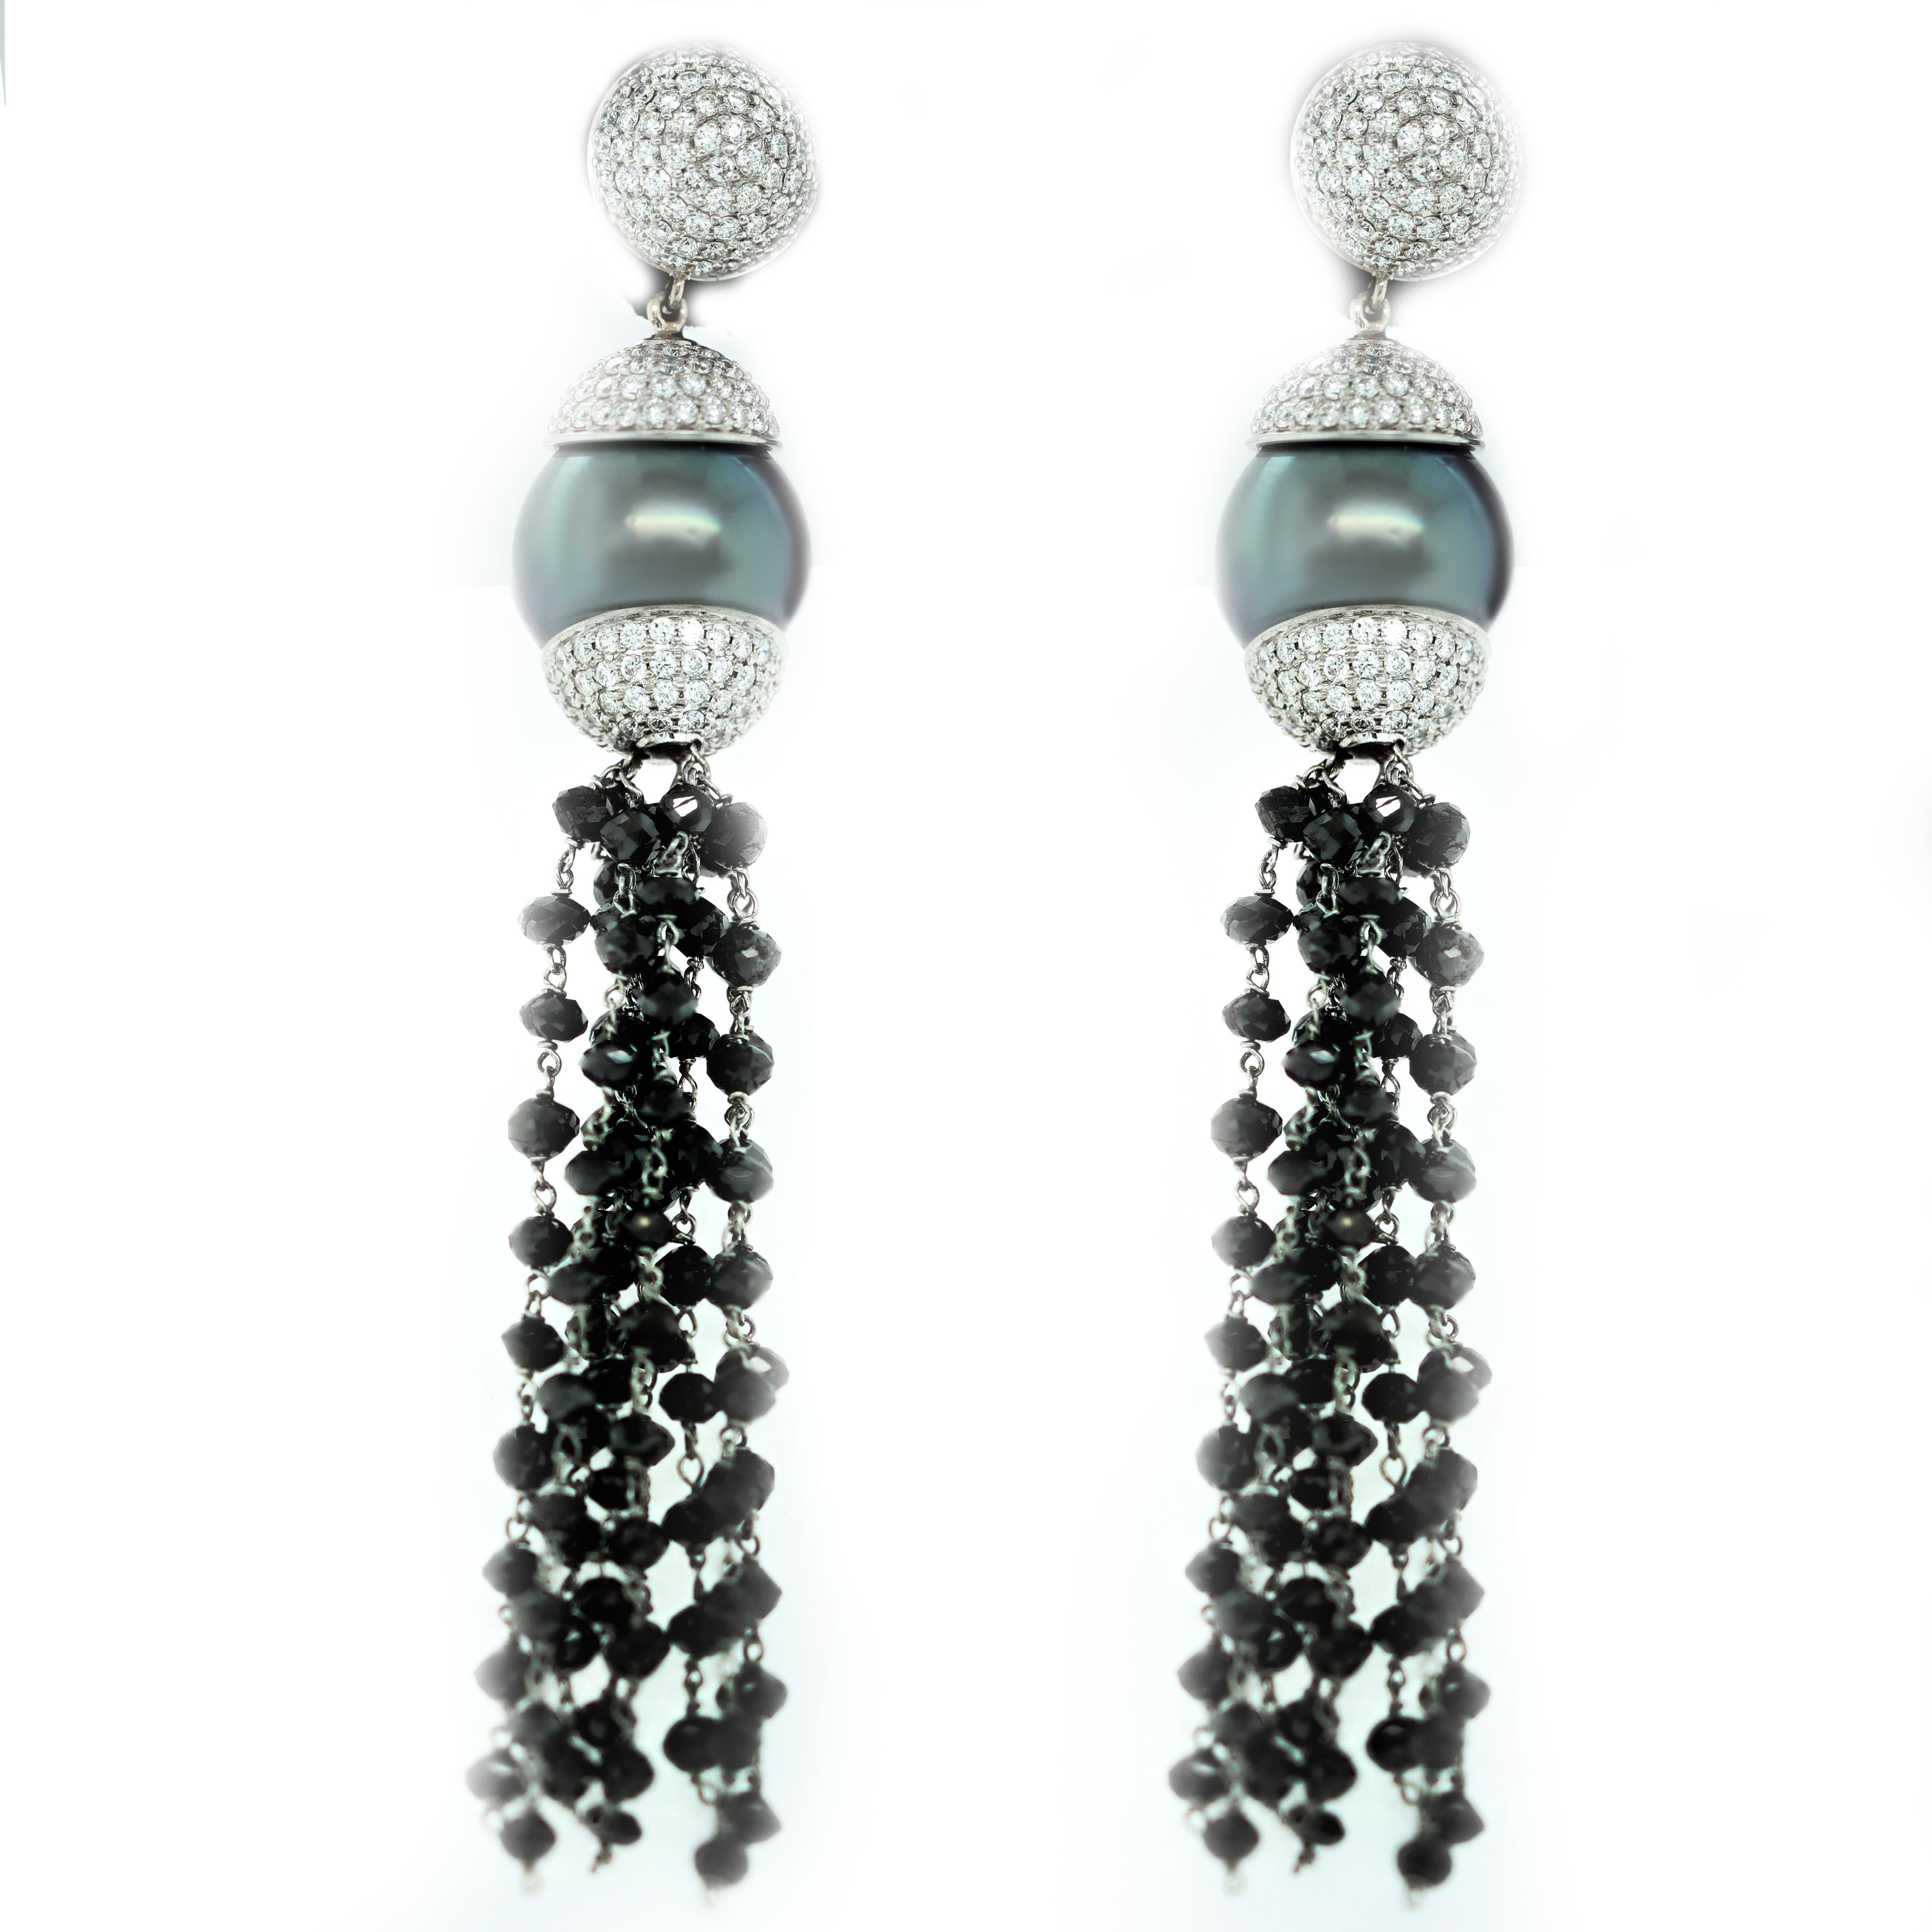 Black Pearl and Diamond Chandelier Fashion Earrings 4.50cts. White Diamonds and 28.00cts Black Diamonds
